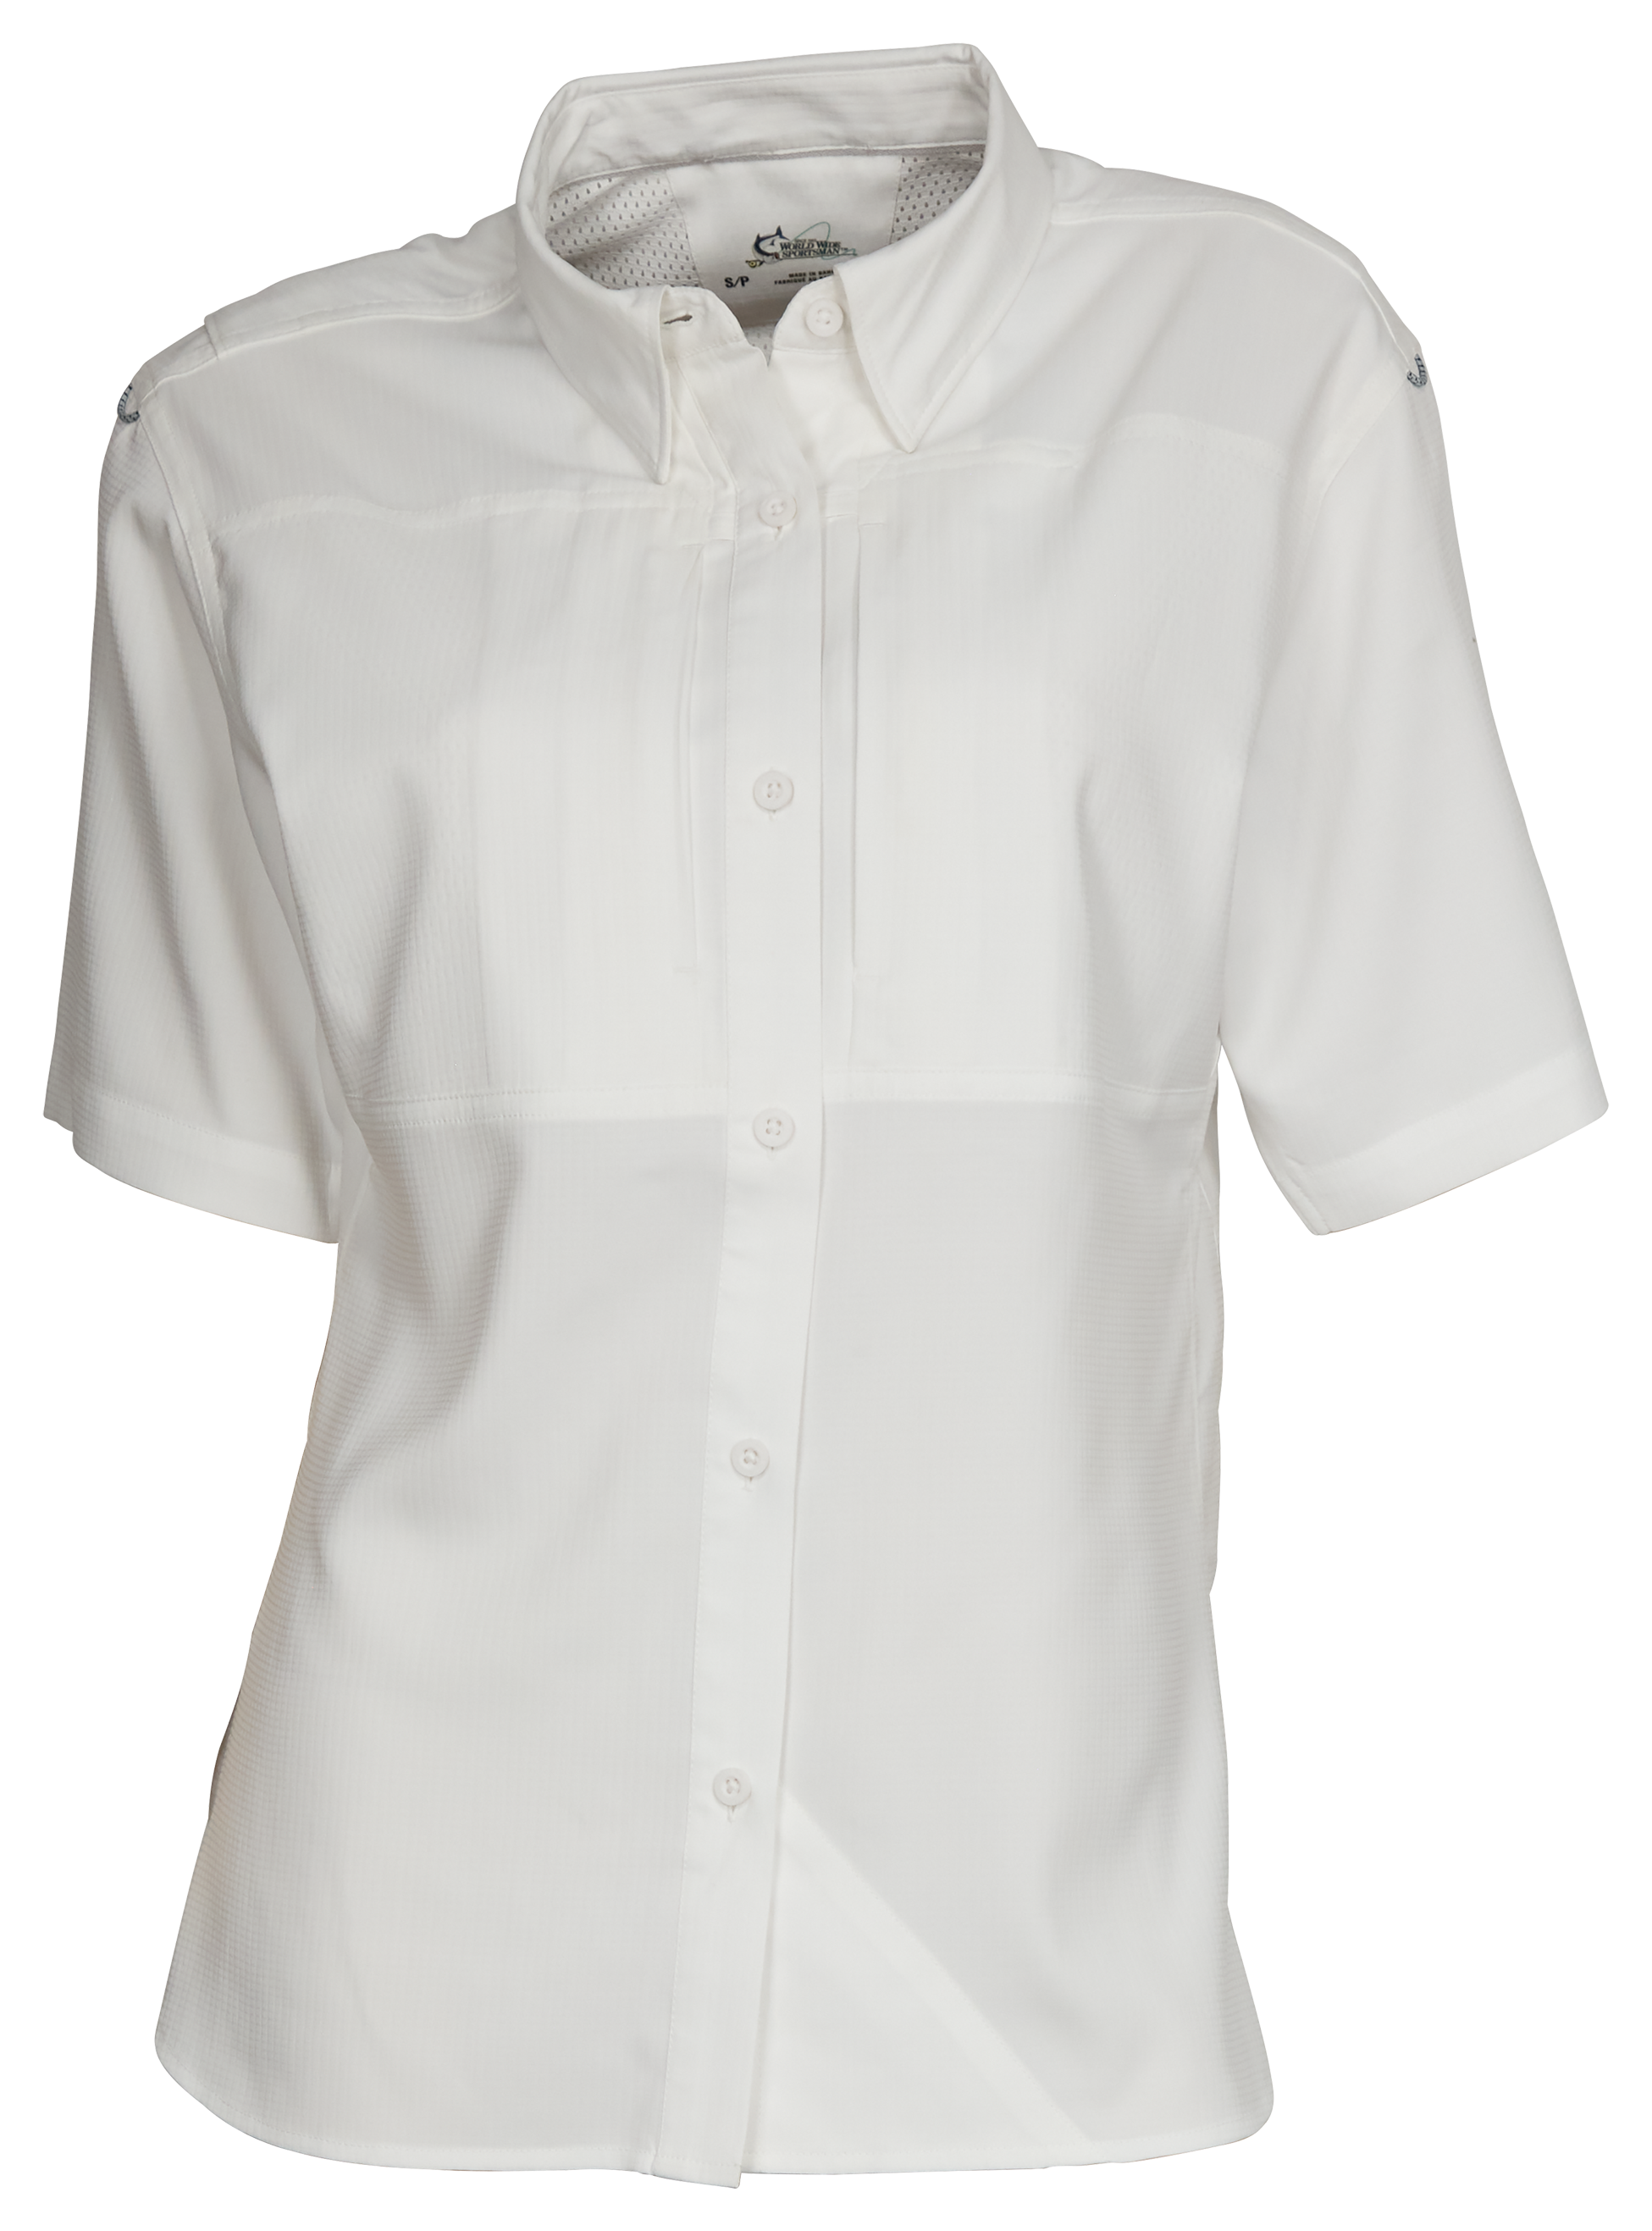 World Wide Sportsman Marina Short-Sleeve Shirt for Ladies - Bright White - L